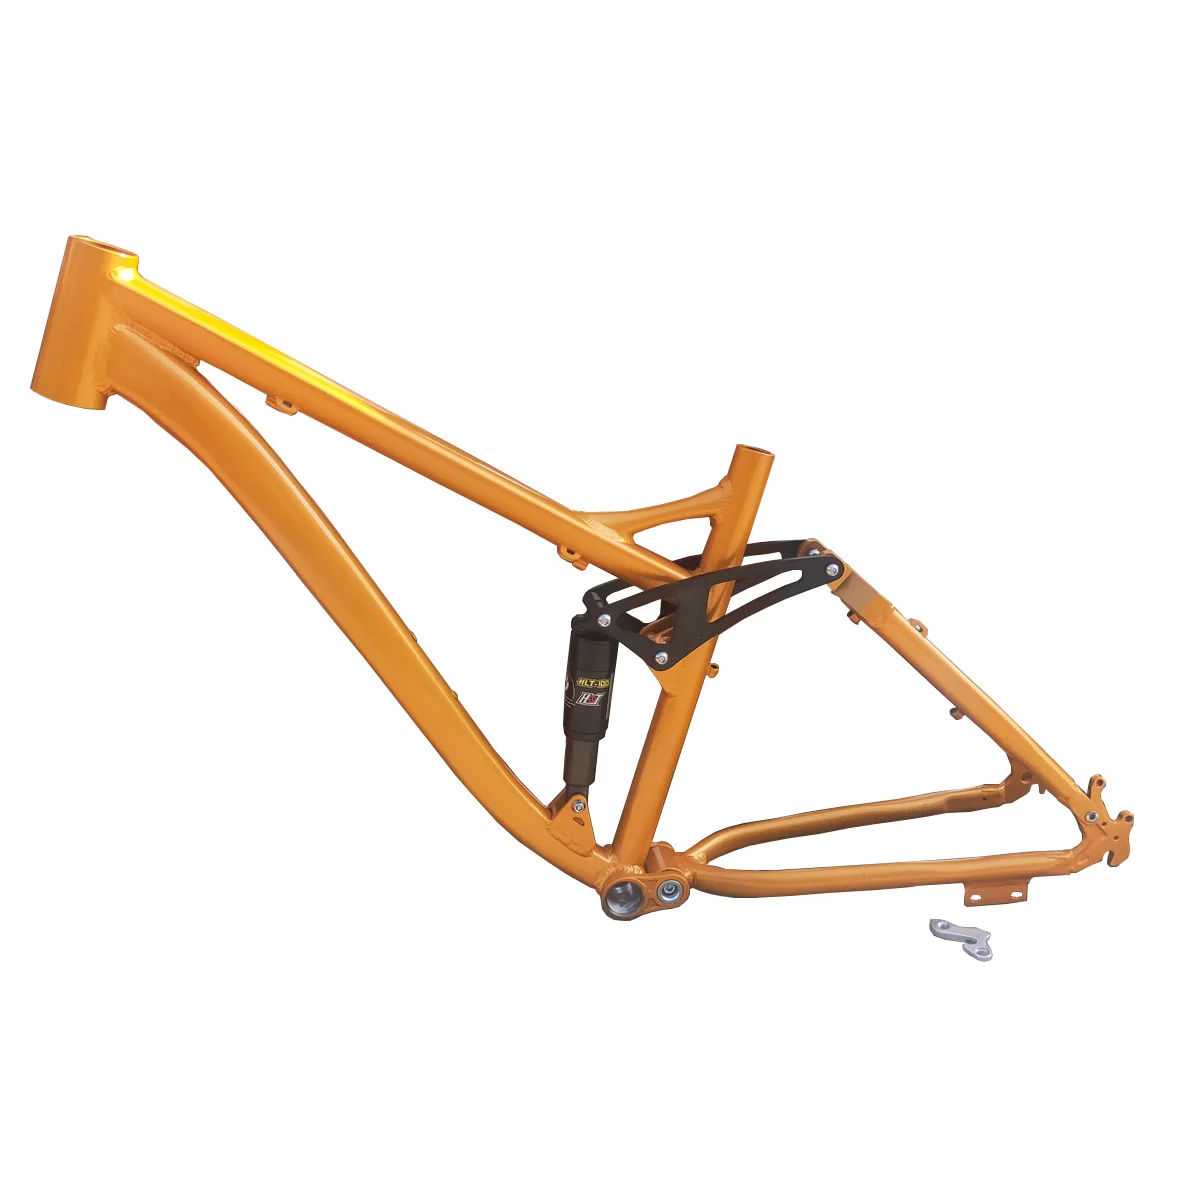 Downhill mountain bike frame|bike frame 